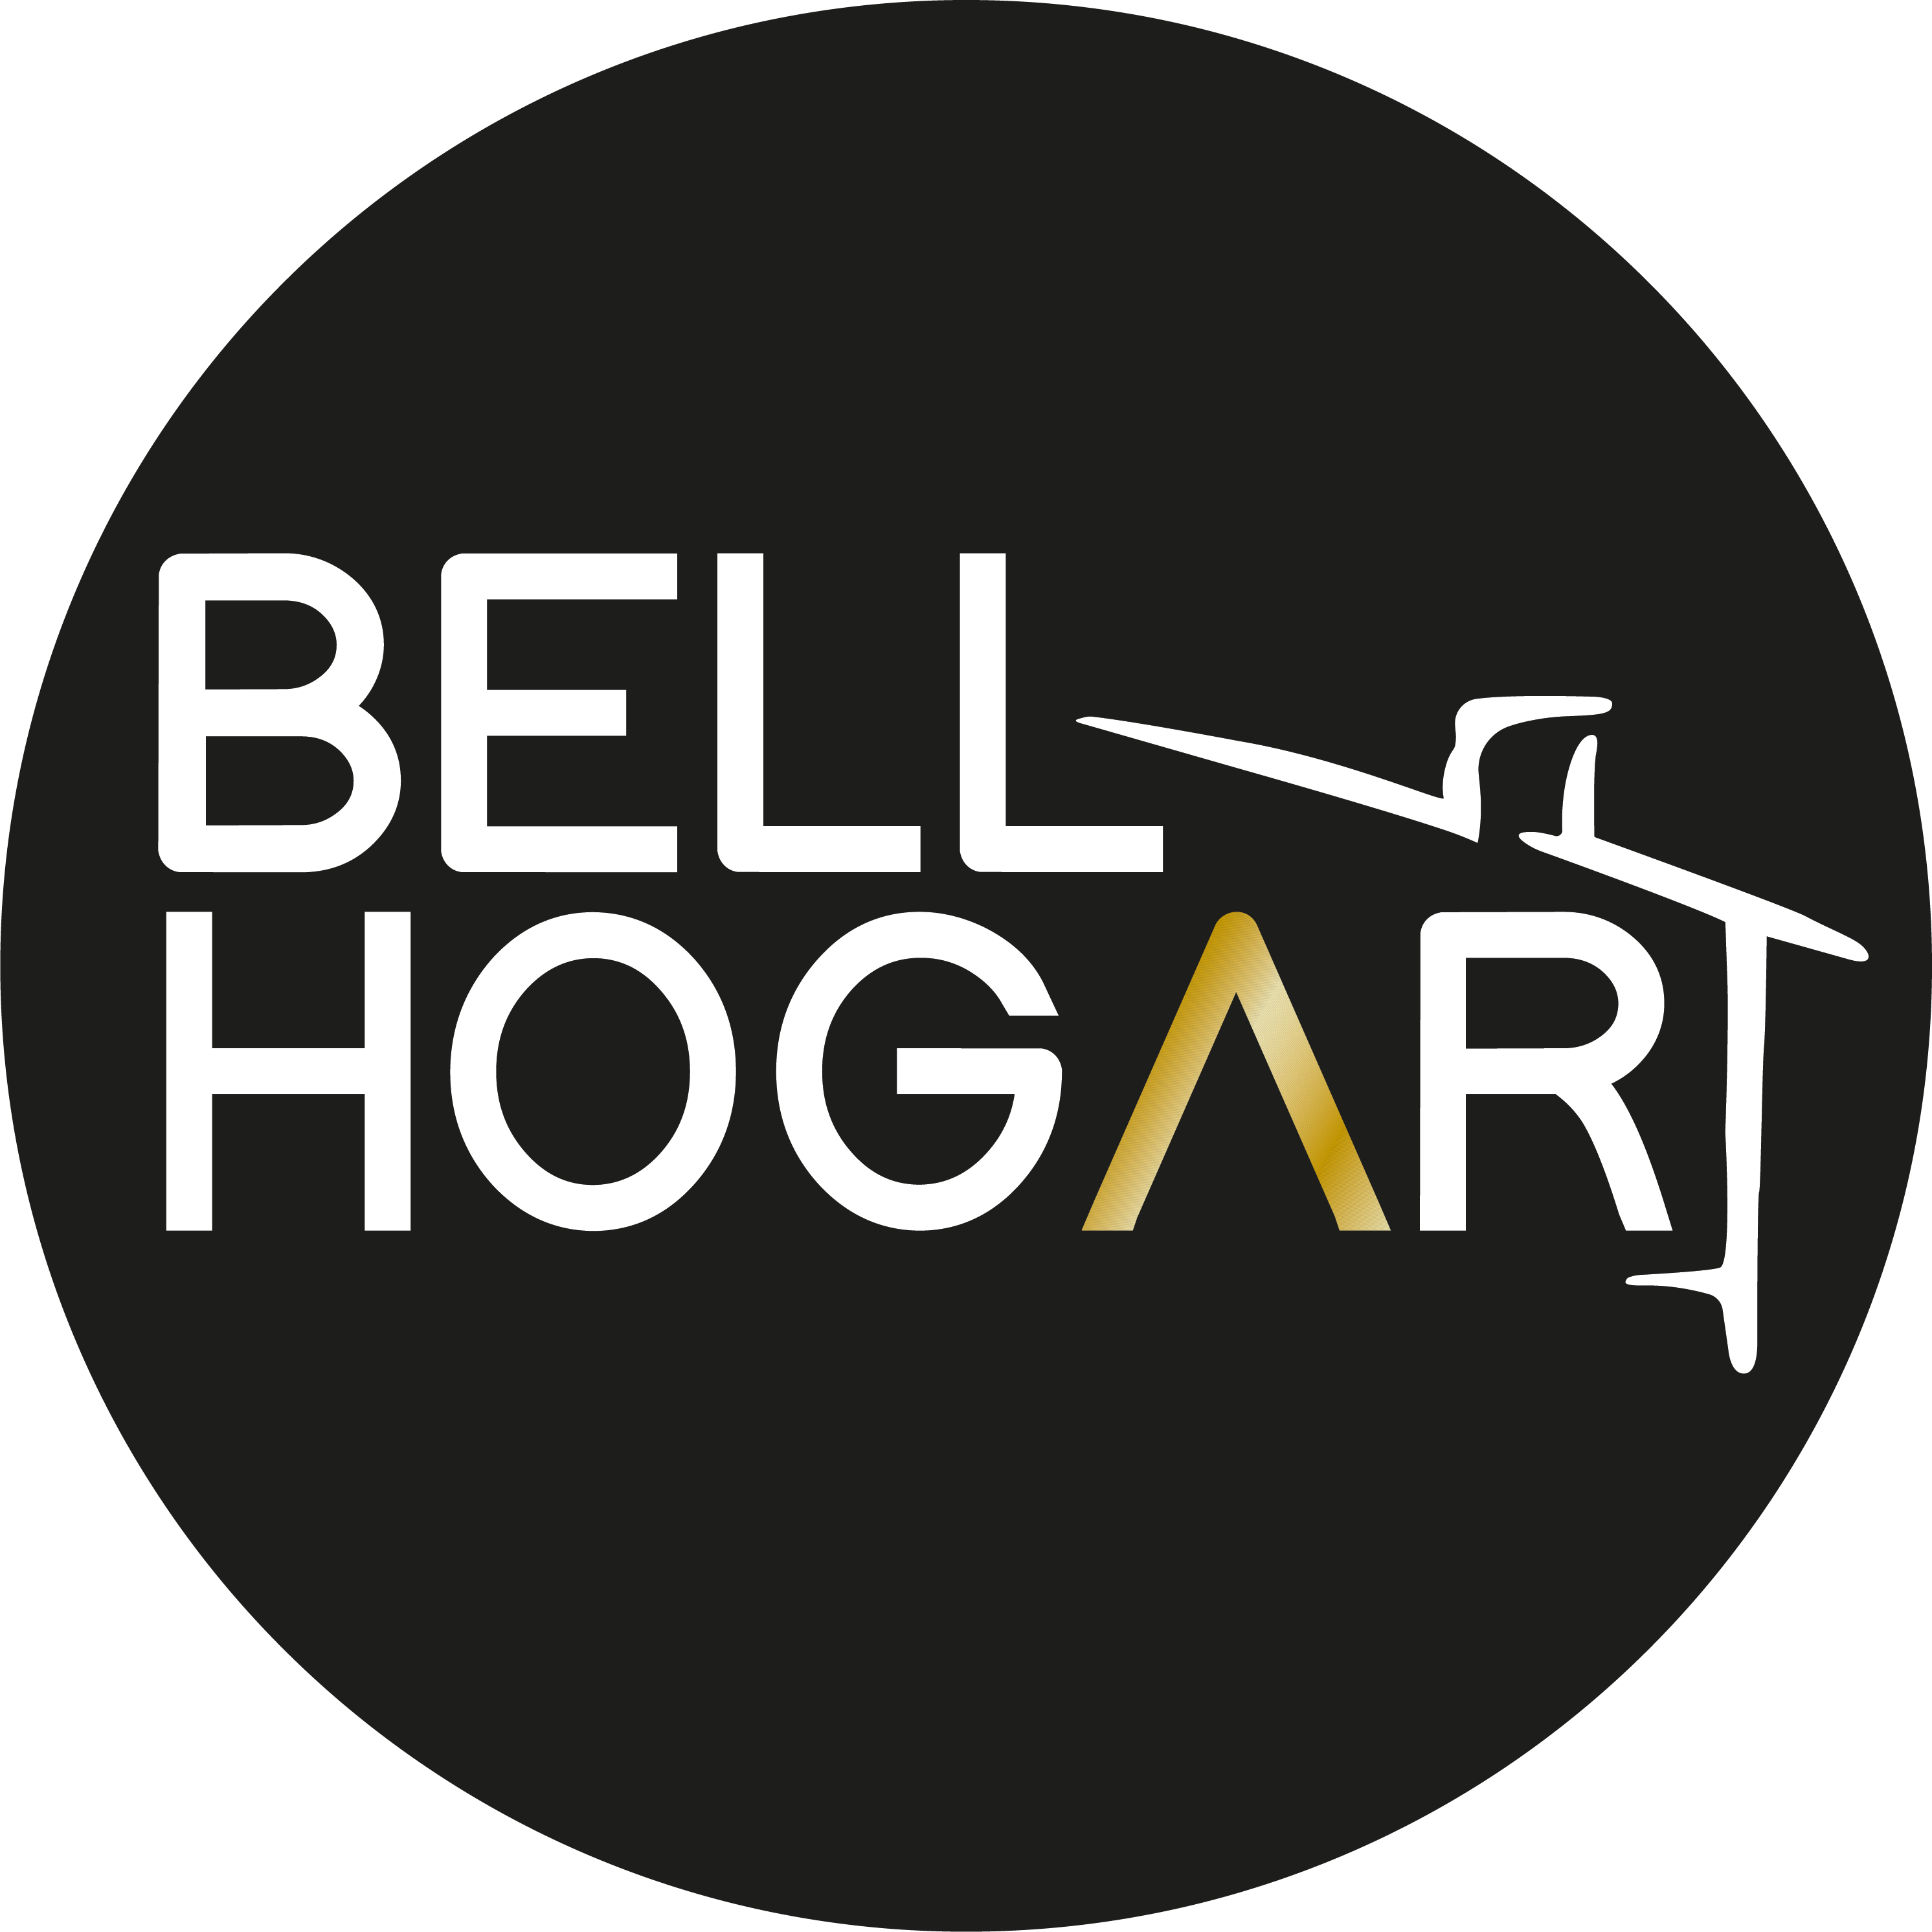 BellHogar 2021 ciculo negro 2.0